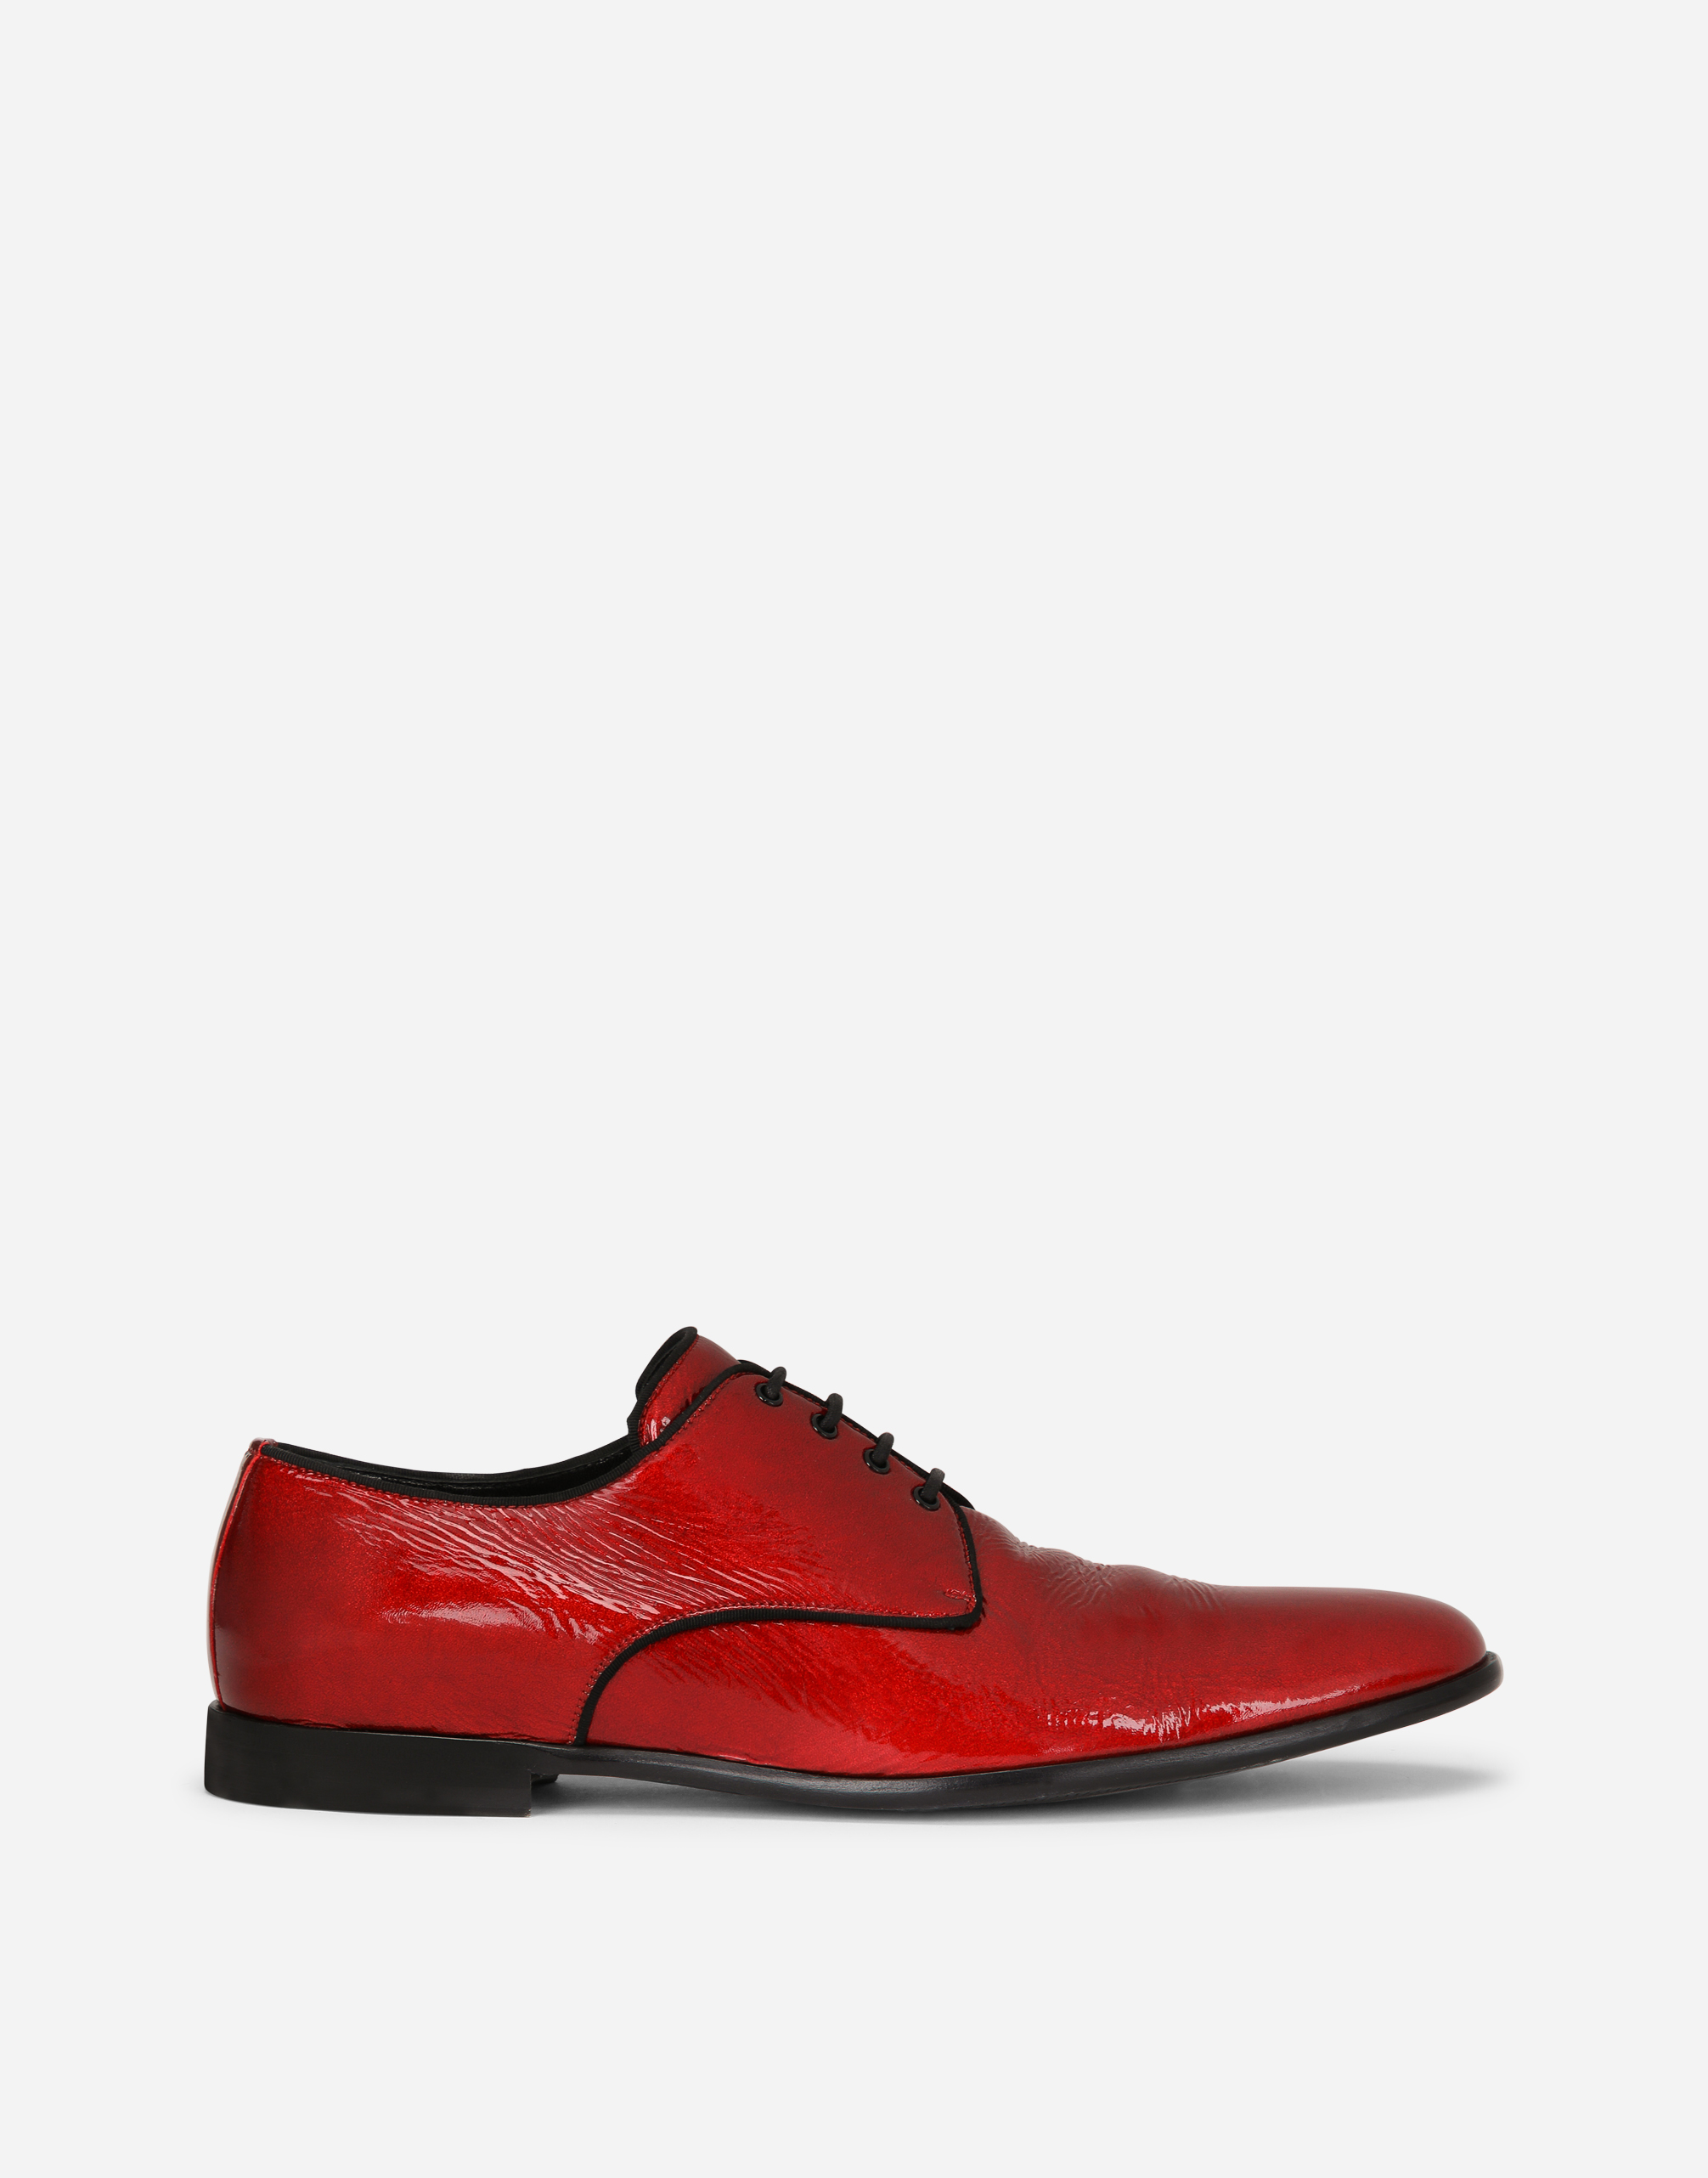 Naplack Raffaello Derby shoes in Red